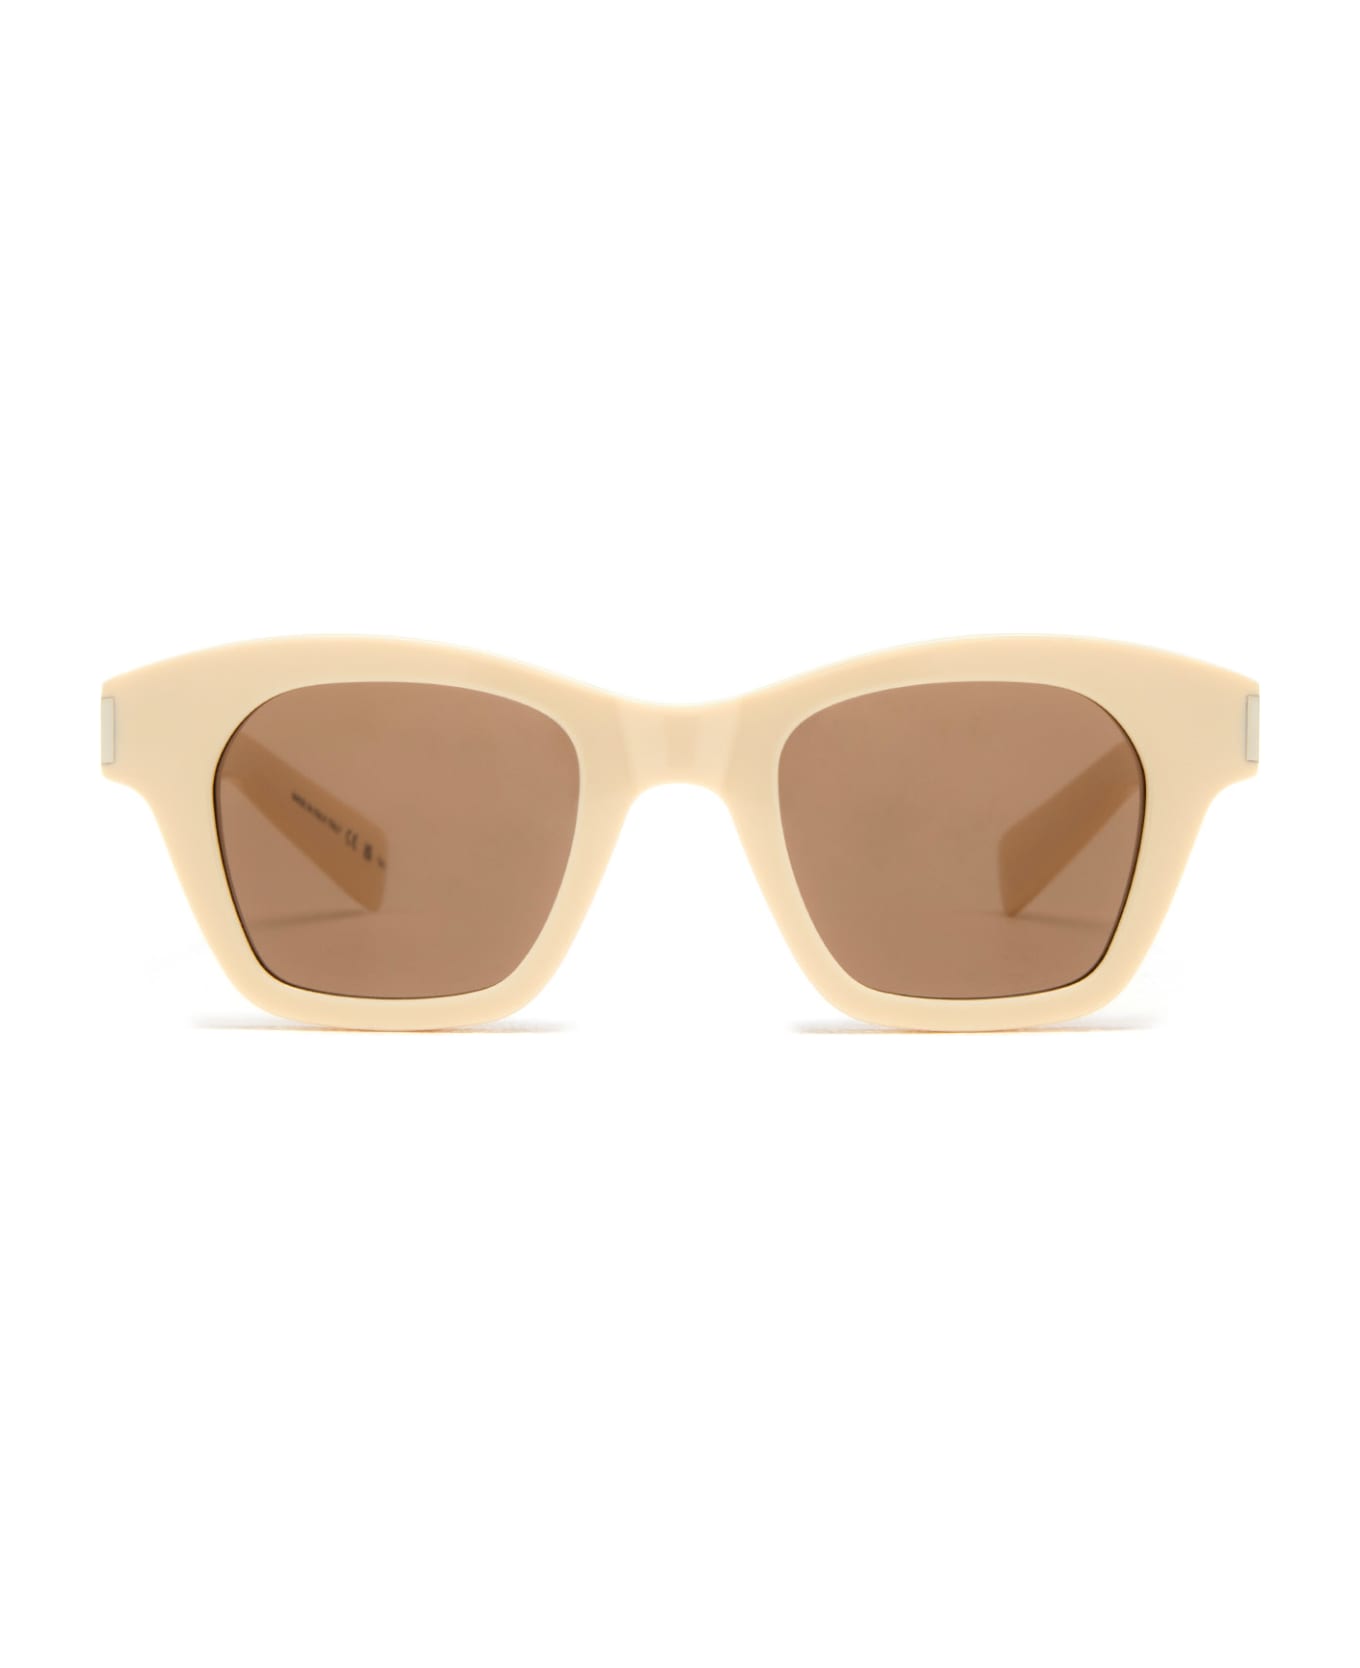 Saint Laurent Eyewear Sl 592 Ivory Sunglasses - Ivory